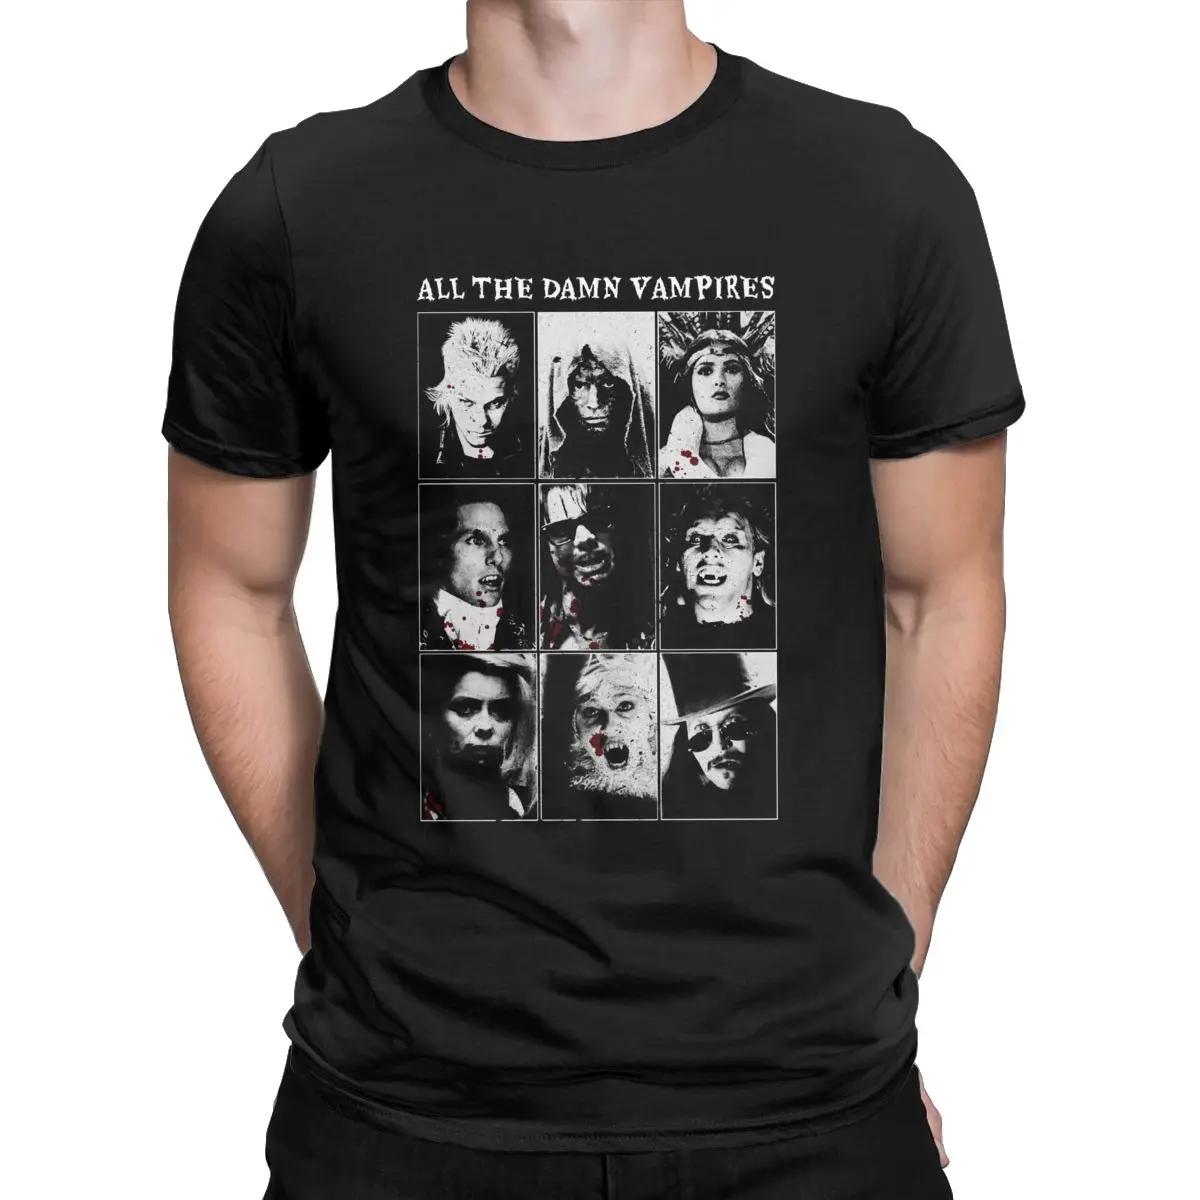 

All The Damn Vampires The Lost Boys t shirt for men horror movie vampires film Round Neck T-Shirt Cotton Plus Size Tops